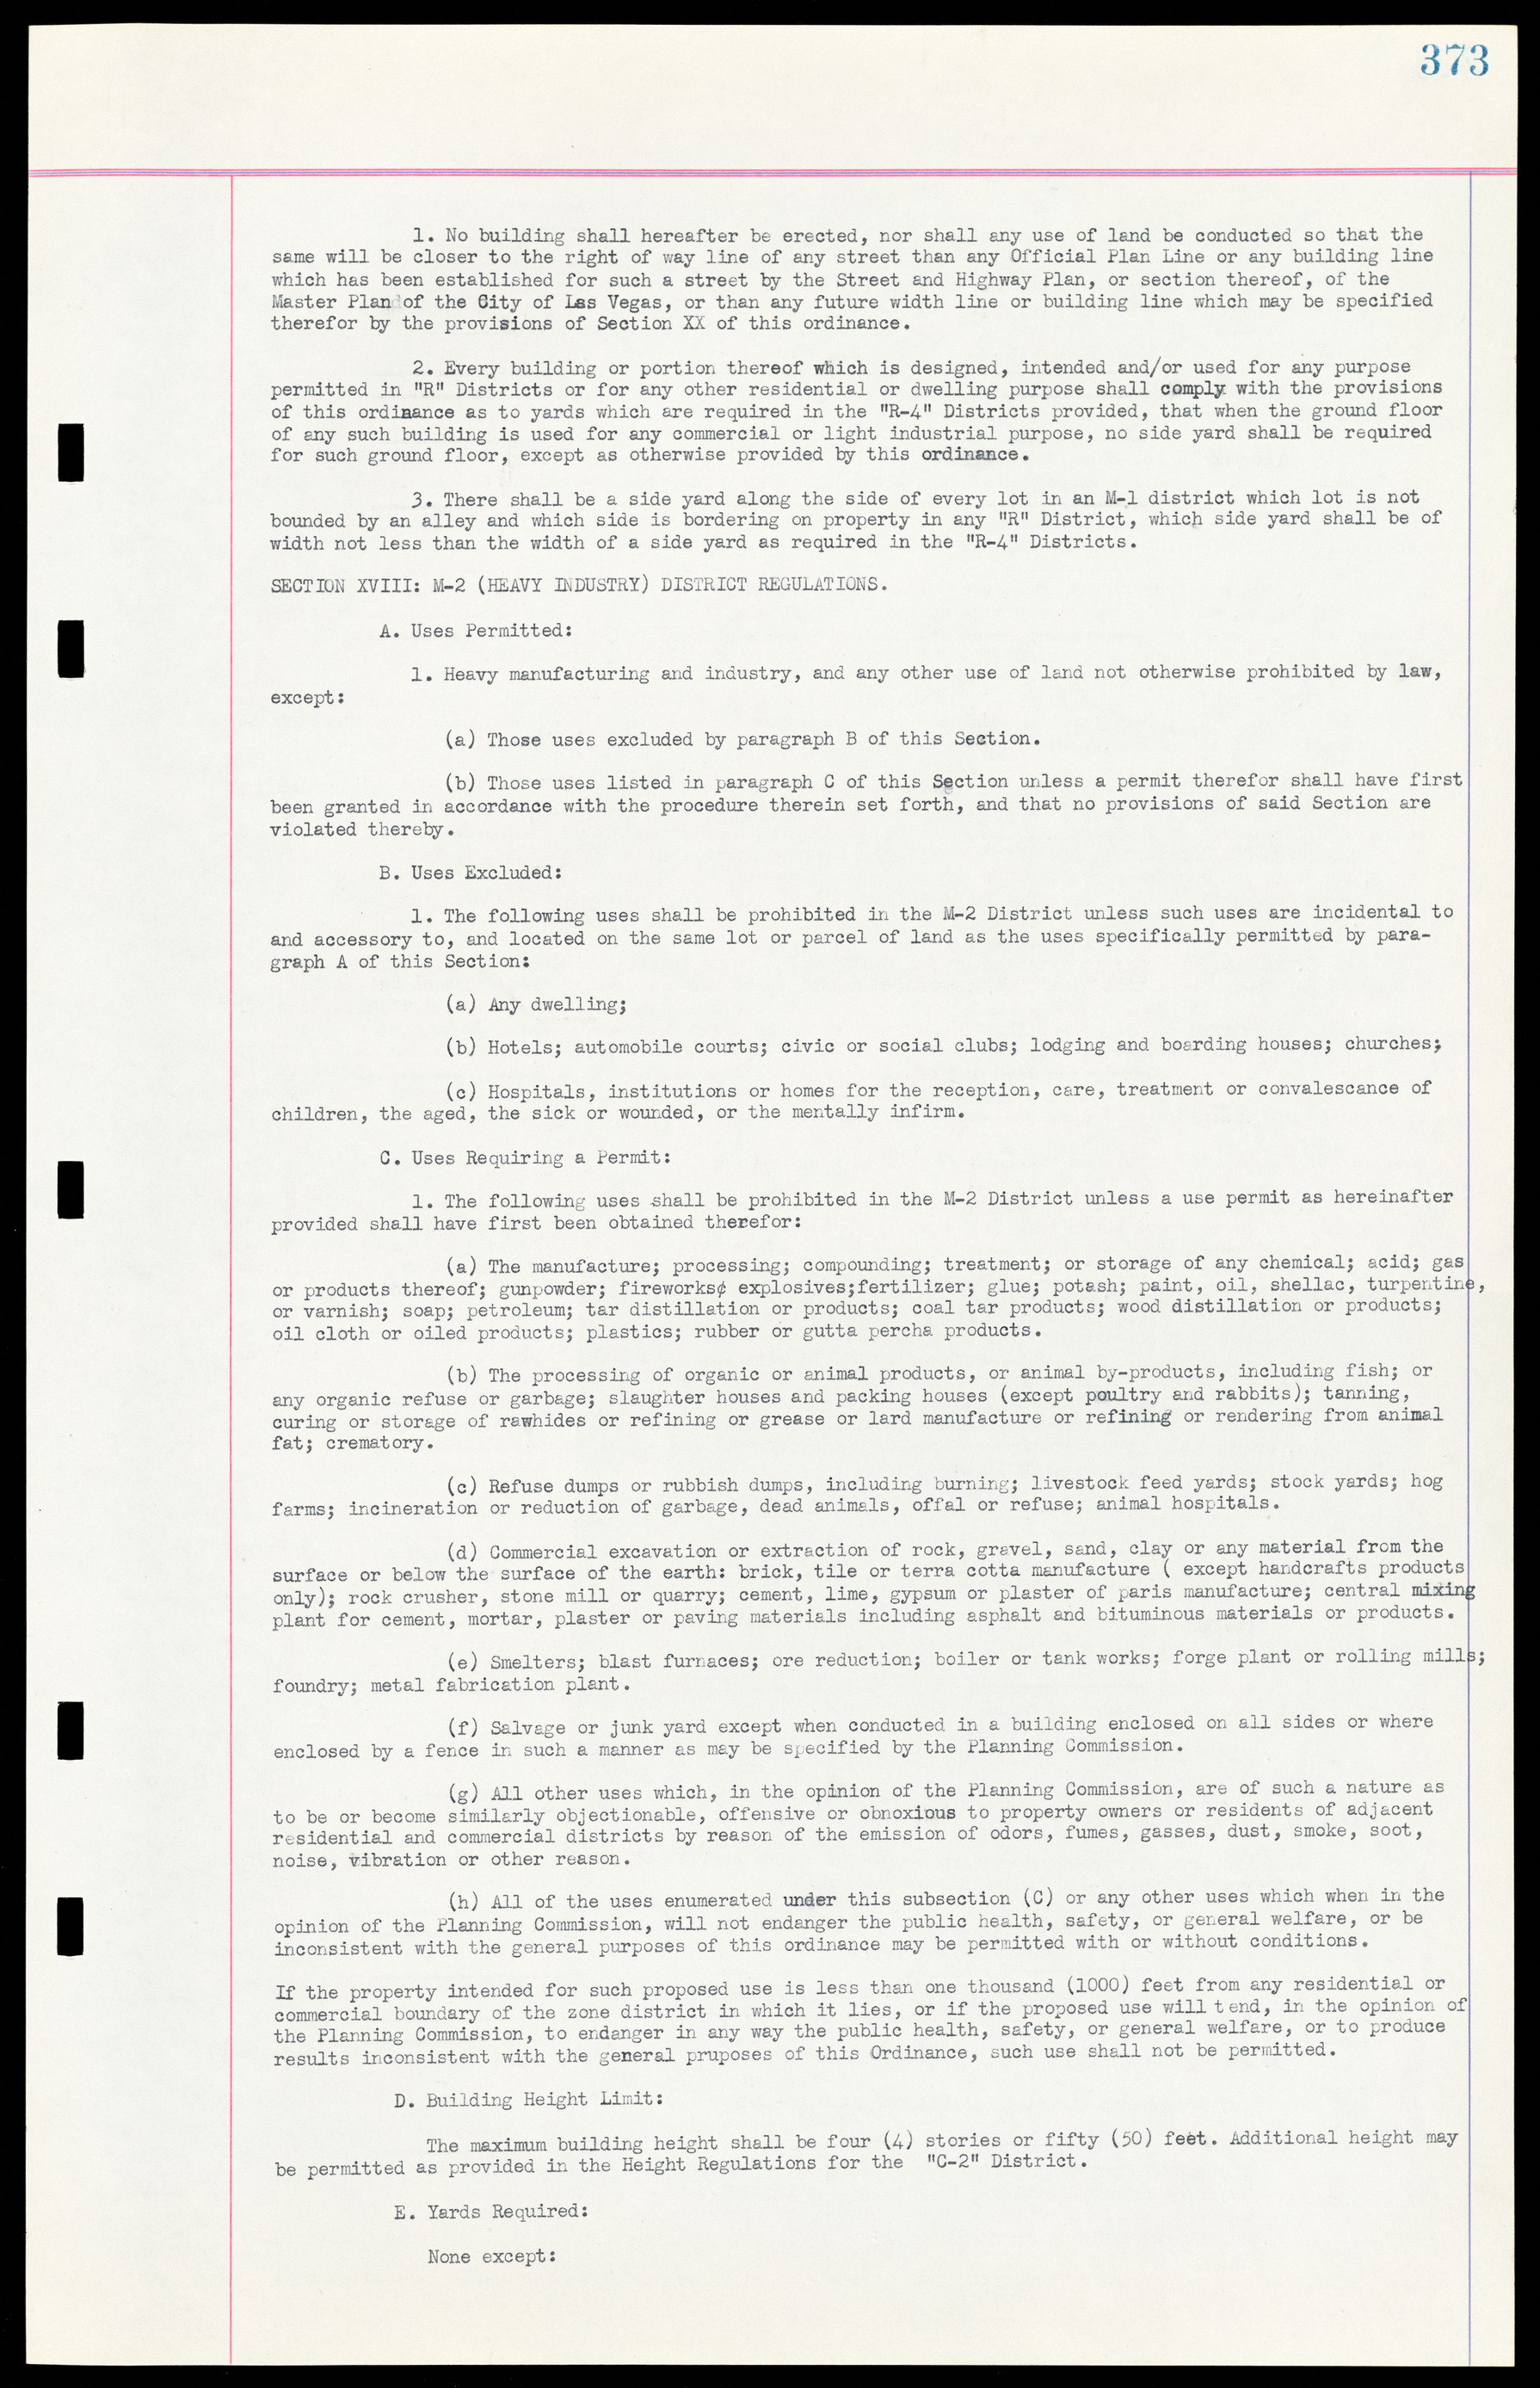 Las Vegas City Ordinances, March 31, 1933 to October 25, 1950, lvc000014-402